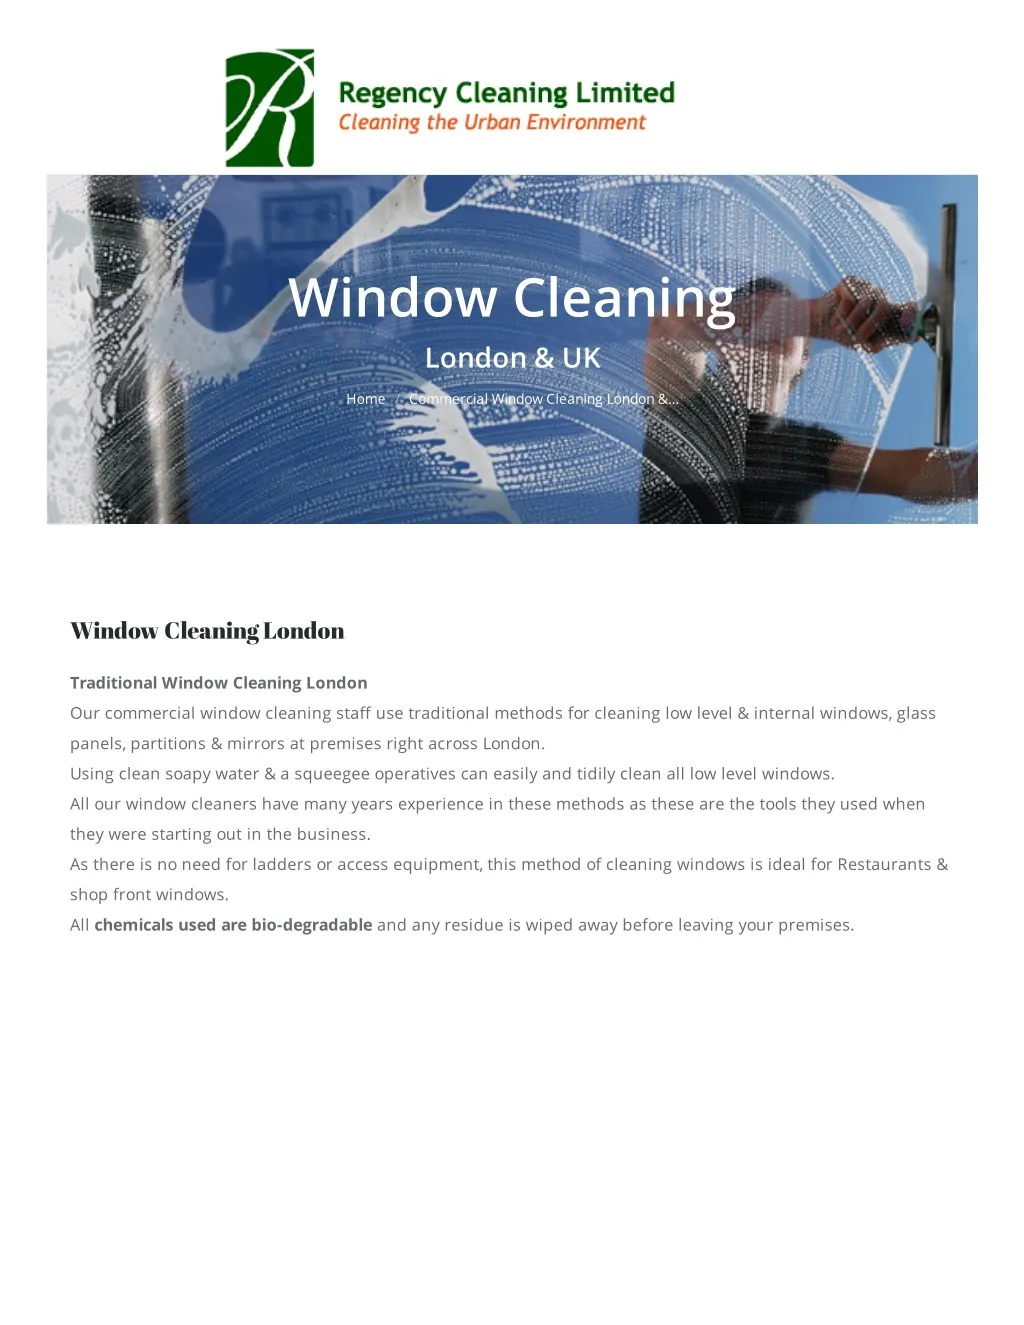 window cleaning london uk